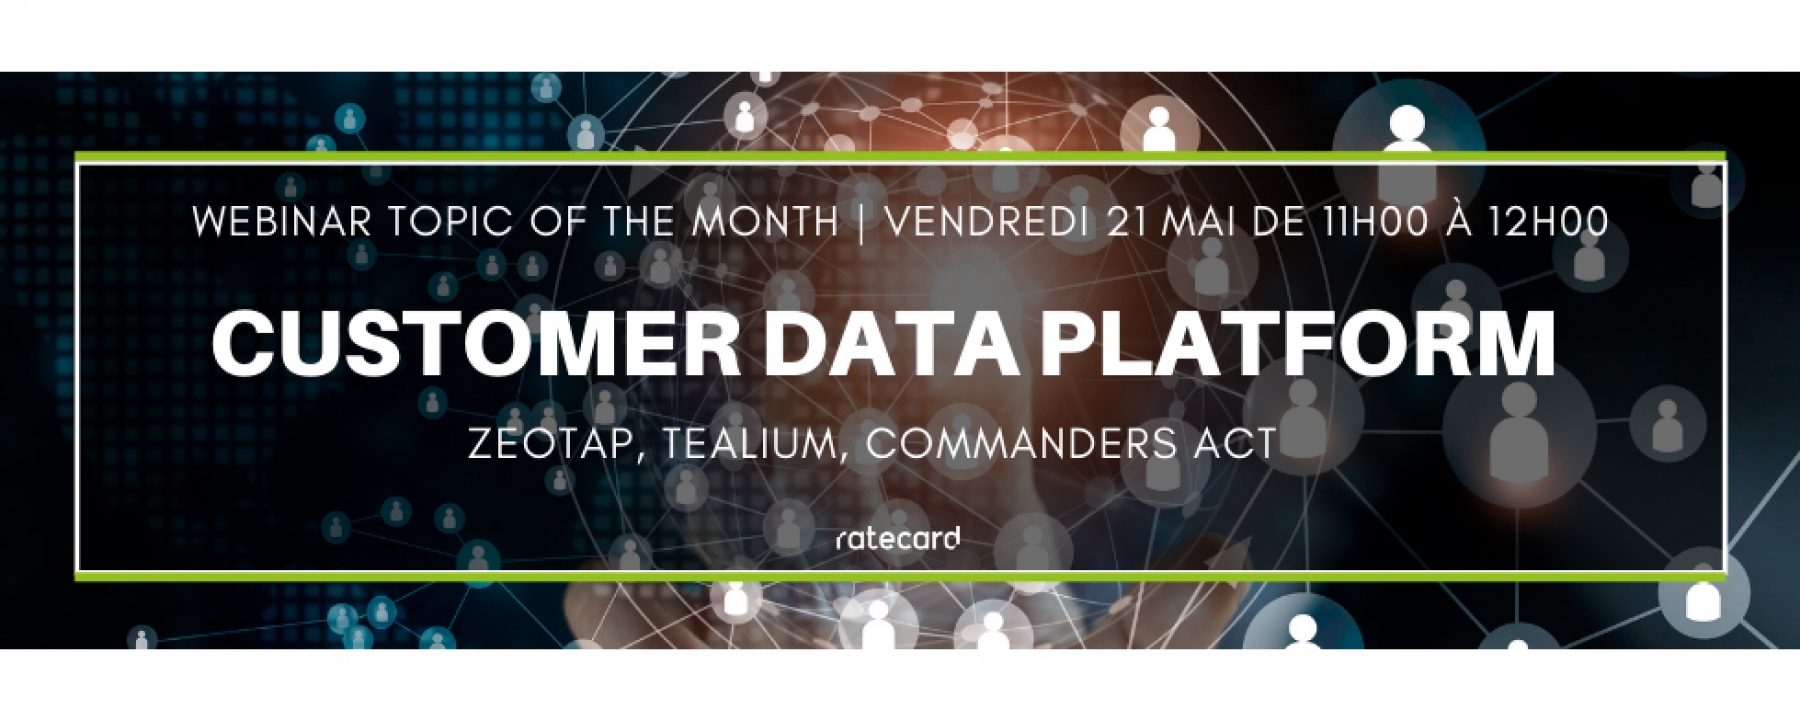 Customer Data Platform, organisé par Ratecard le 21 mai 2021